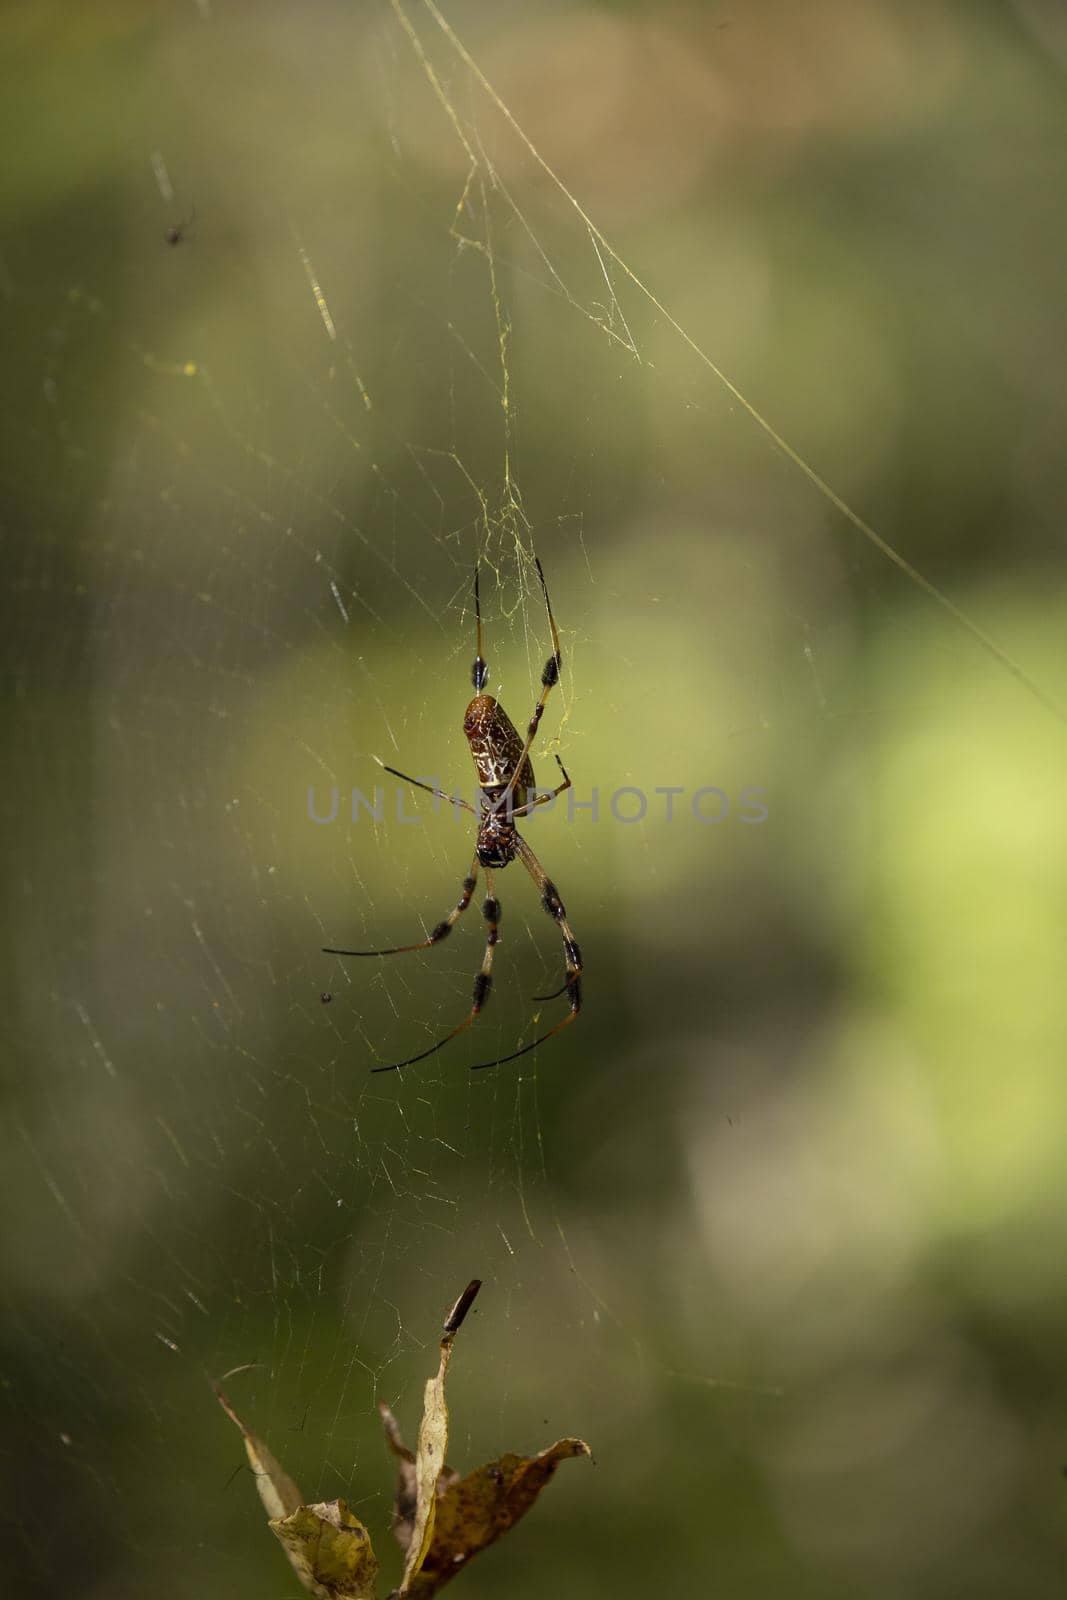 Golden orb weaver spider (Nephila) on its web